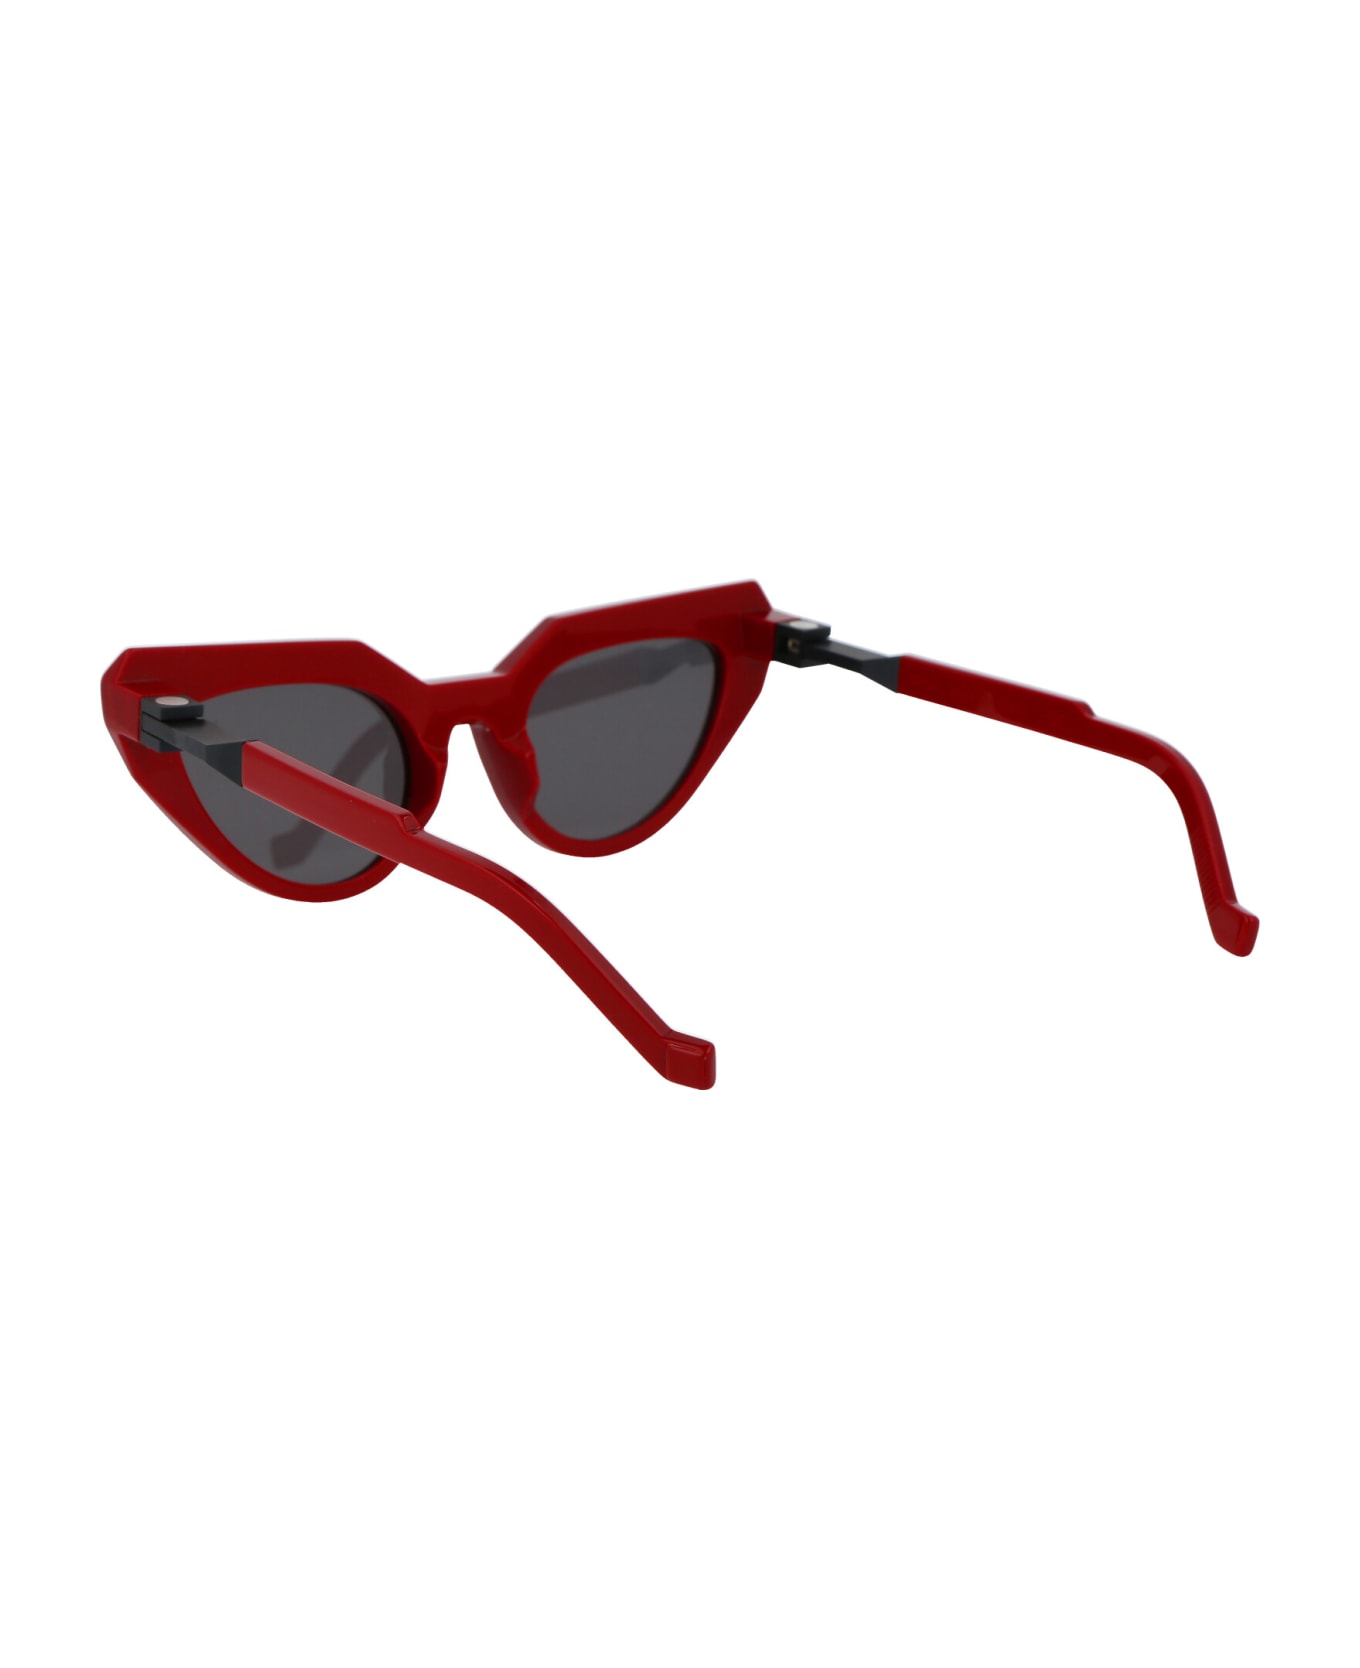 VAVA Bl0028 Sunglasses - RED|BLACK FLEX HINGES|BLACK LENSES サングラス